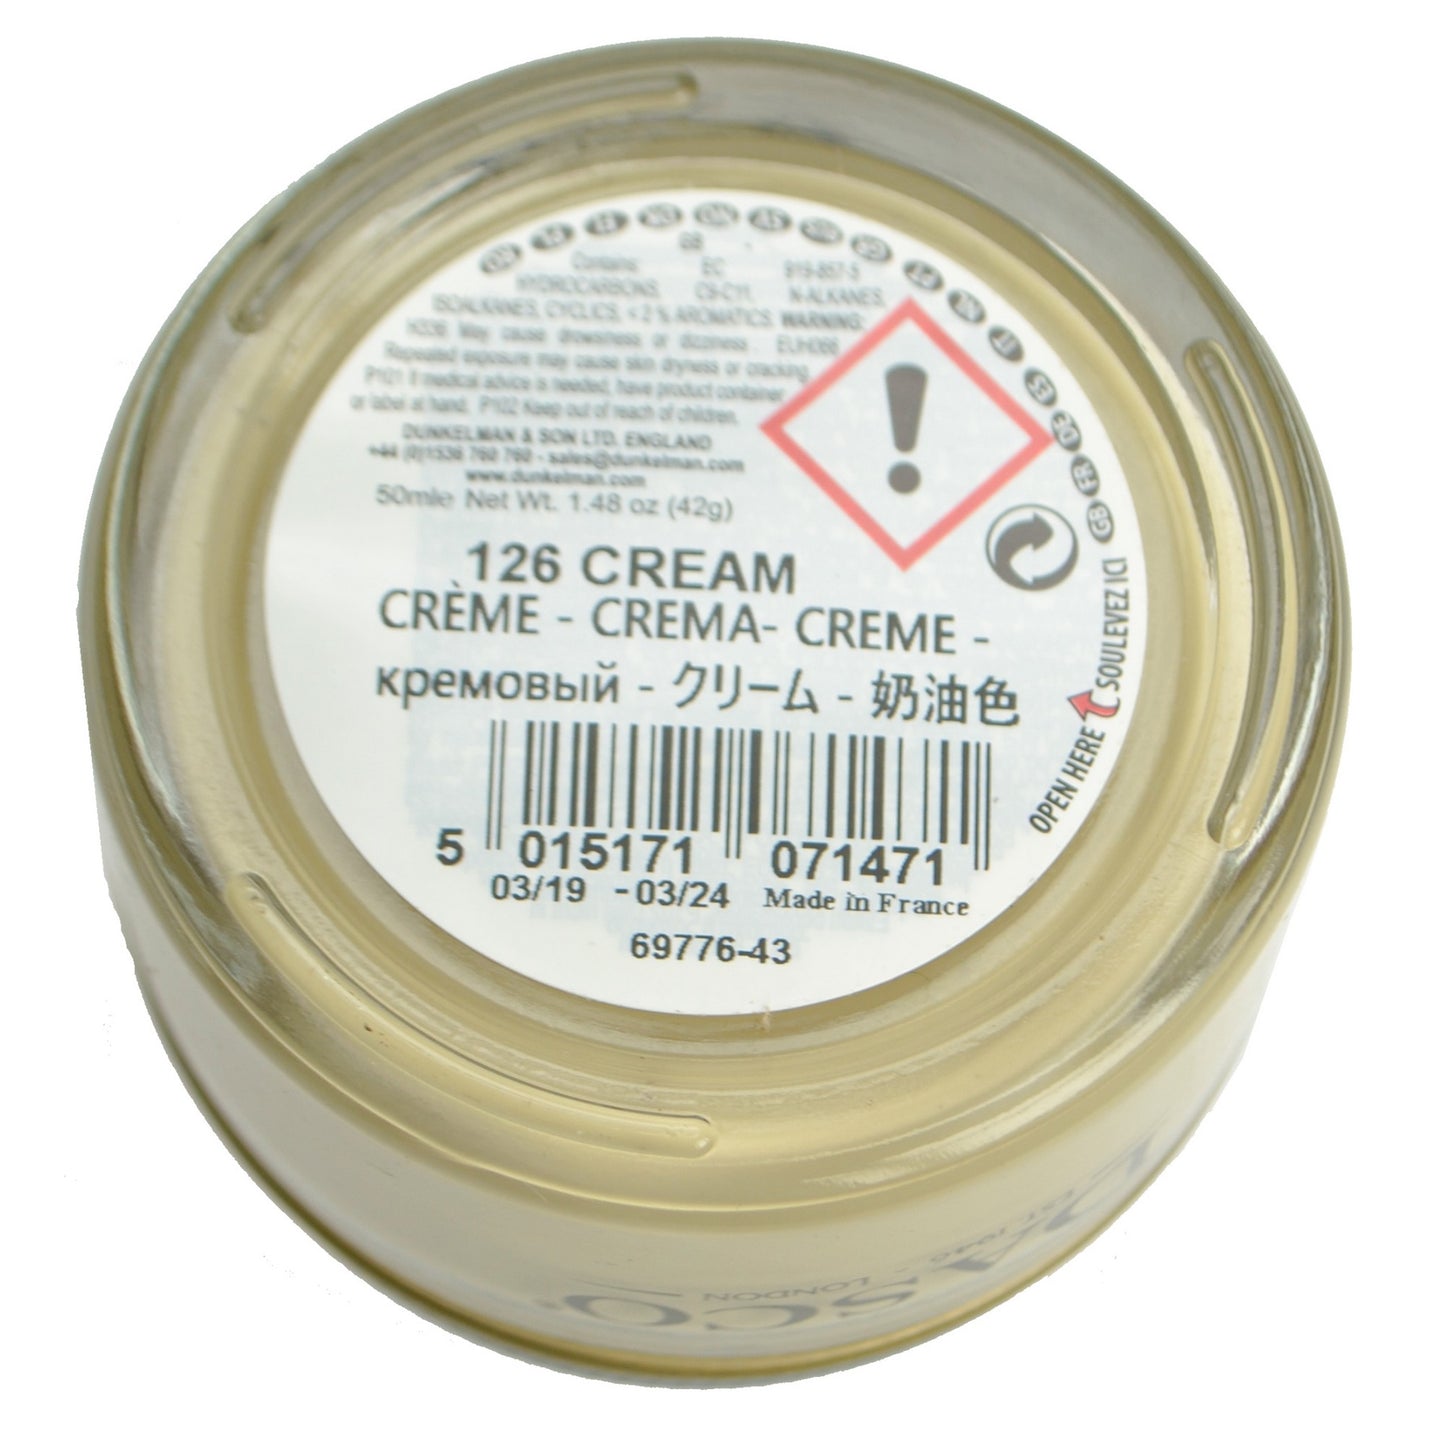 Dasco Shoe Cream Shoe Polish with Beeswax - Cream No.126